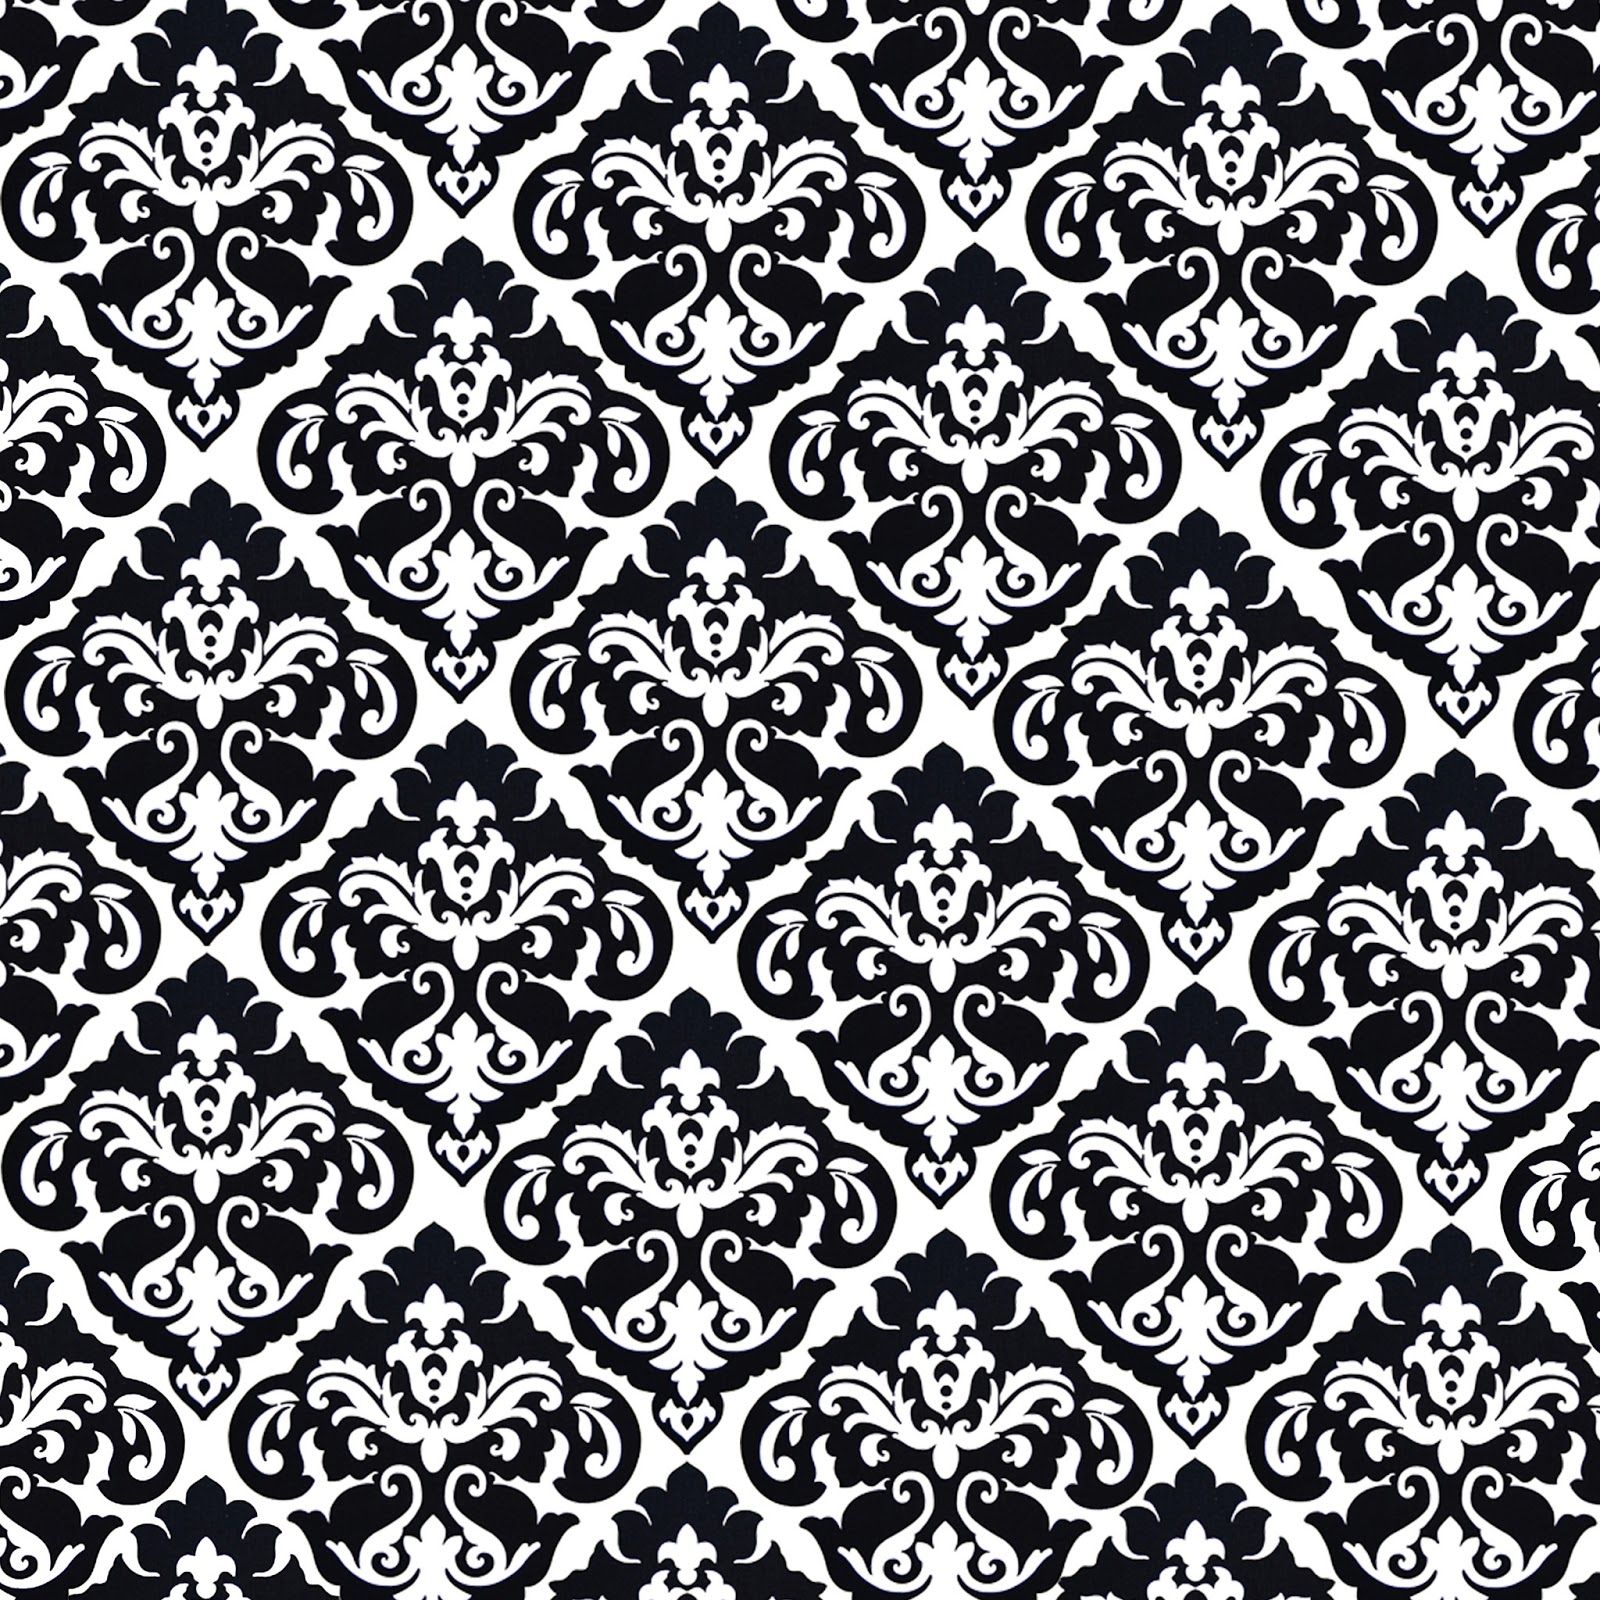 Pattern Wallpaperawsome Background Wallpaper Black And White Vintage